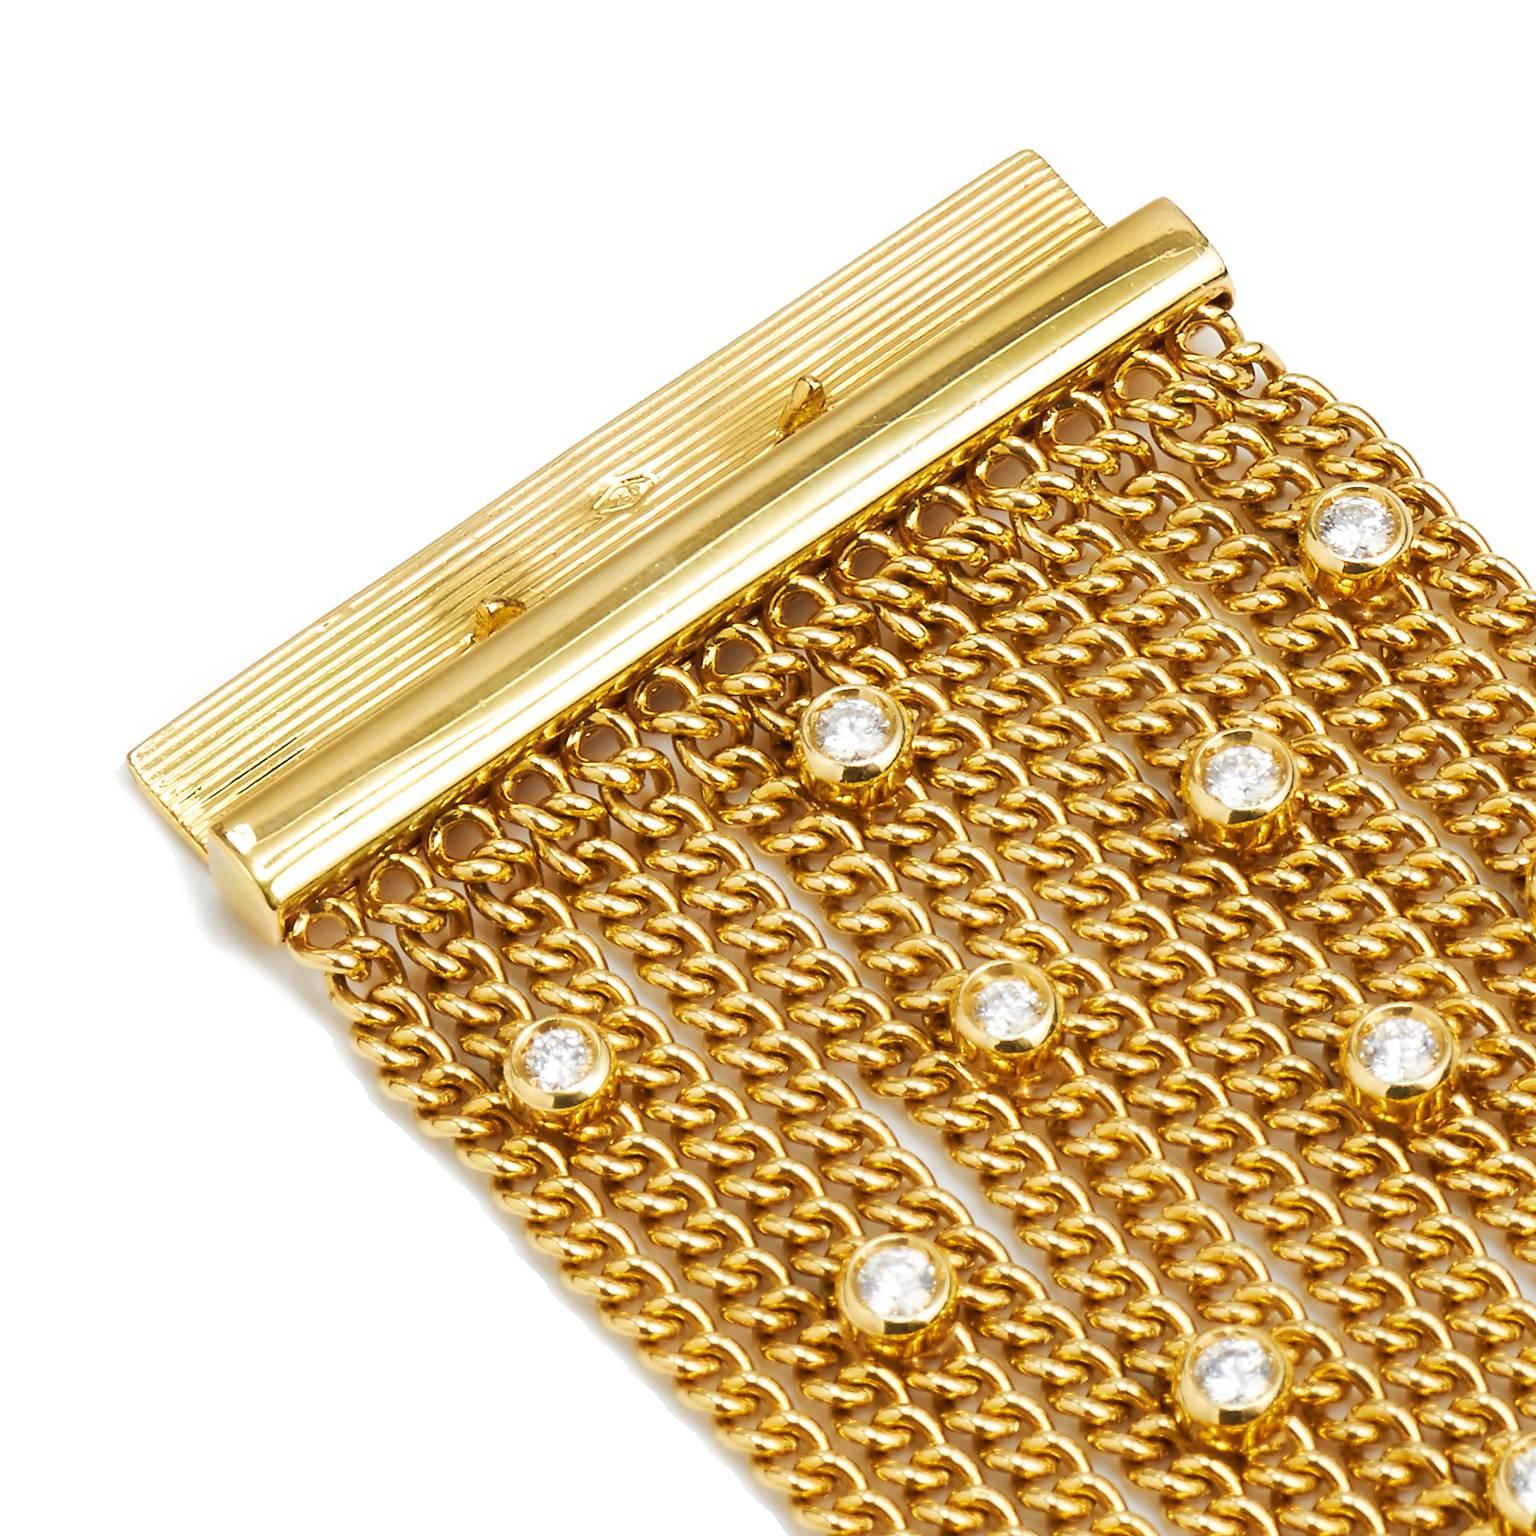 18K yellow gold Aspery & Guldag multi-strand bracelet with bezel set diamonds throughout and pavé diamonds at slide lock closure.